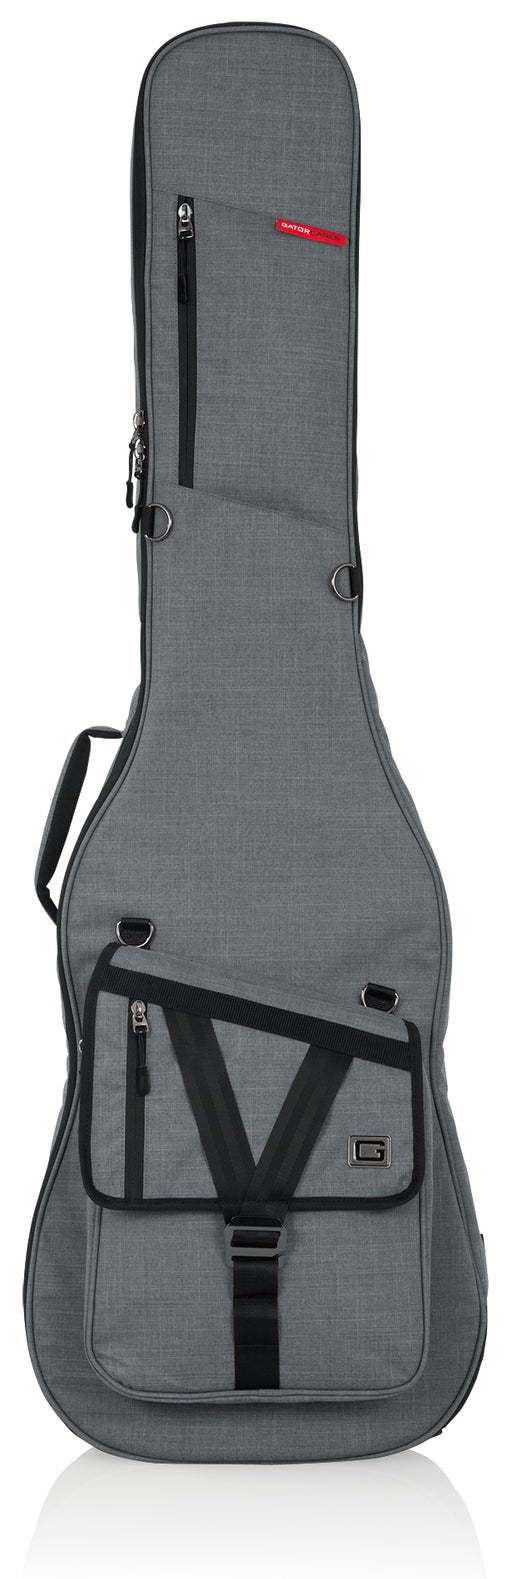 Gator GT-BASS-GRY Transit Bass Guitar Bag - Light Grey